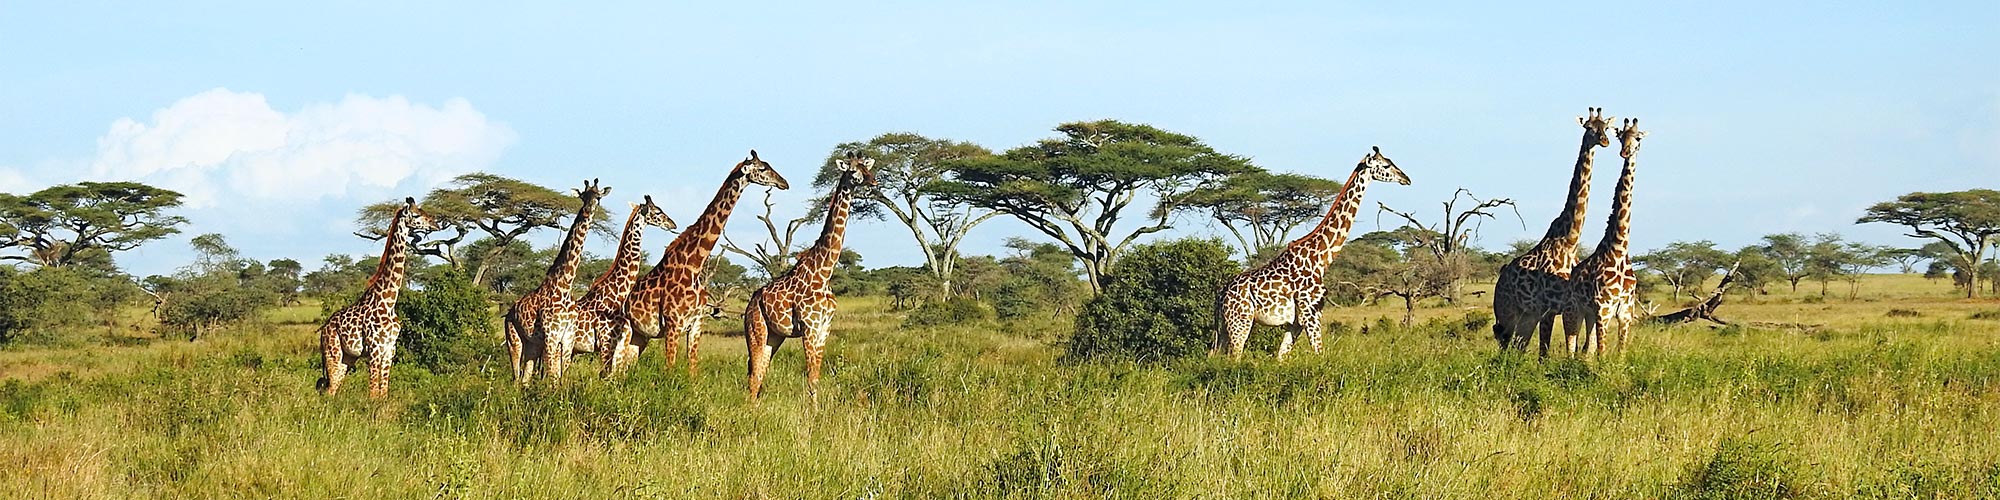 Studienreise Tanzania - im Safari-Paradies